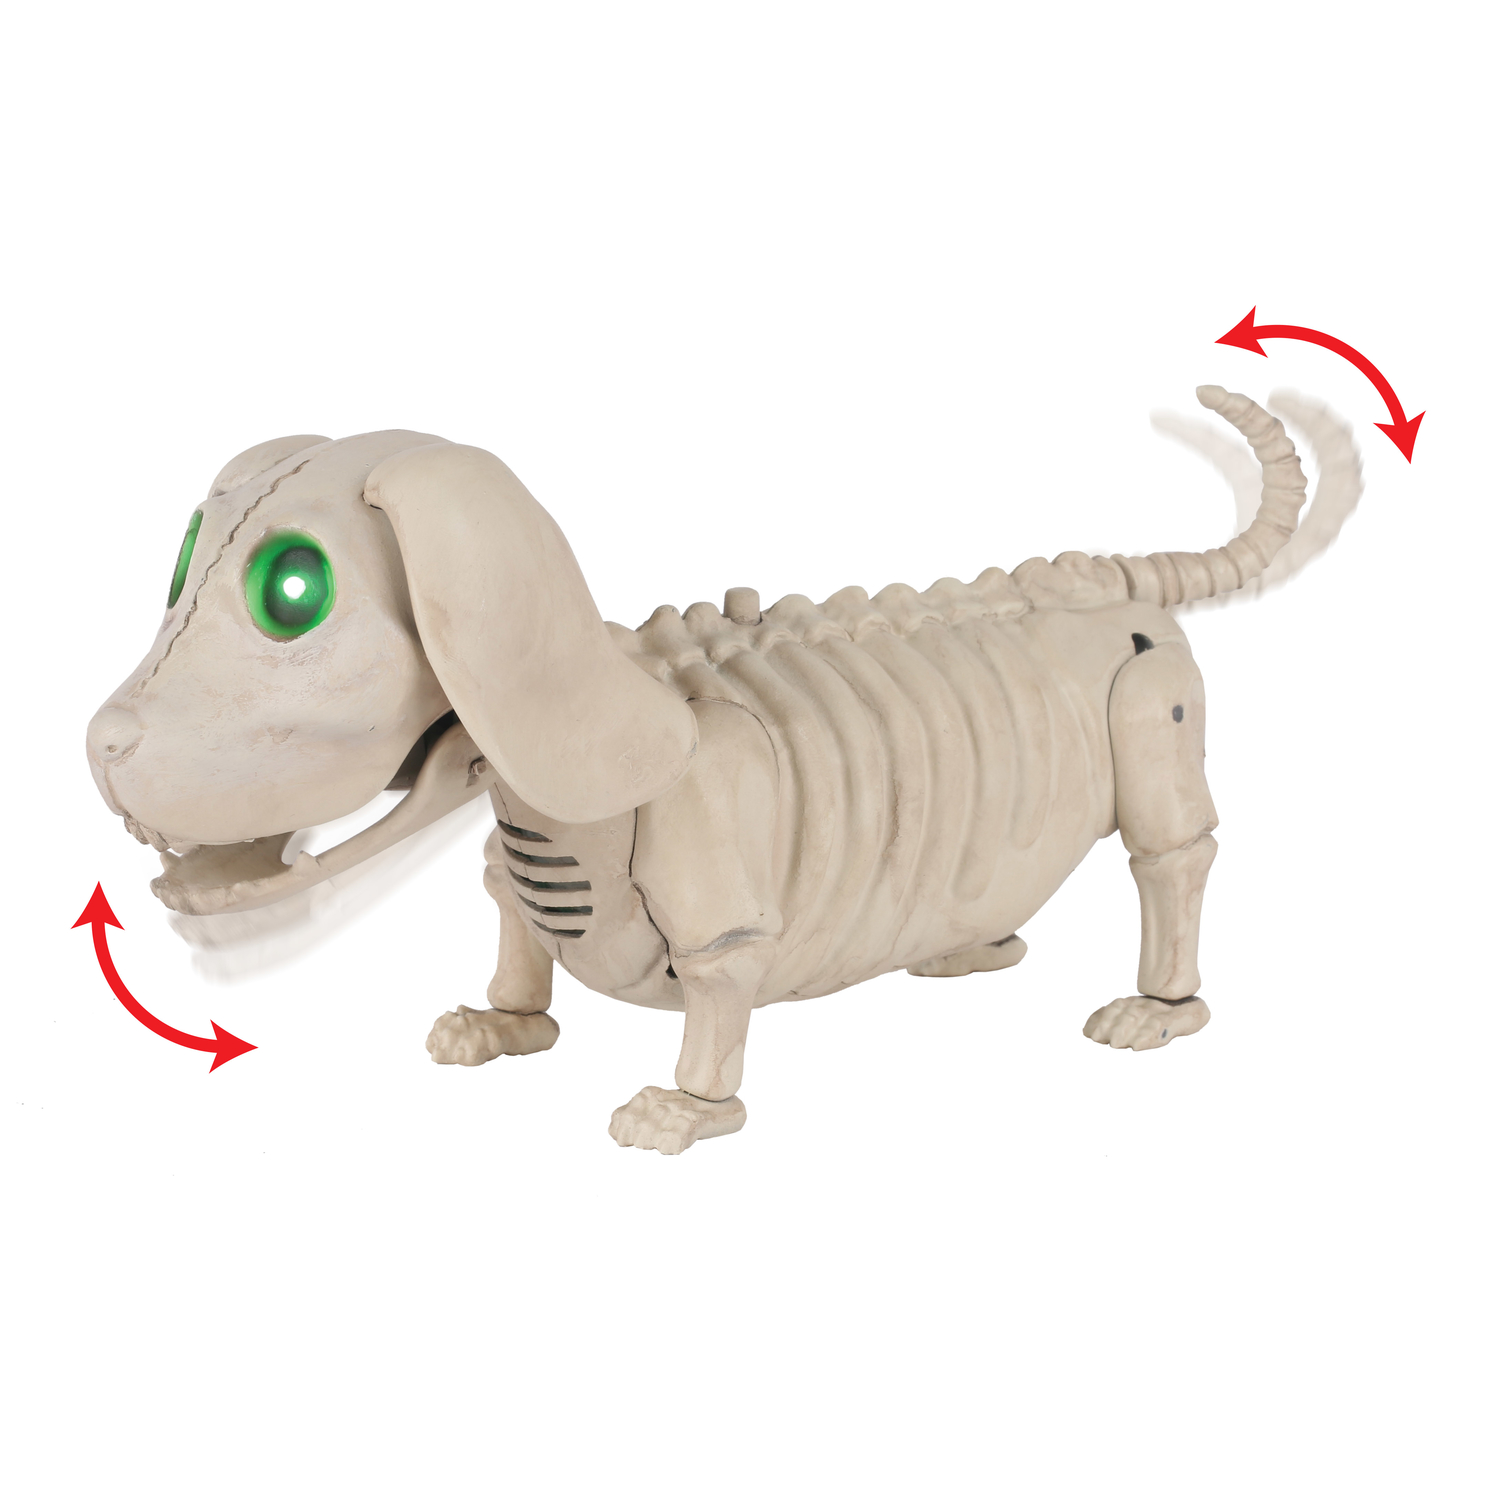 Photos - Other interior and decor Seasons Green 3.5 in. Prelit Animated Wiener Dog Skeleton Halloween Decor